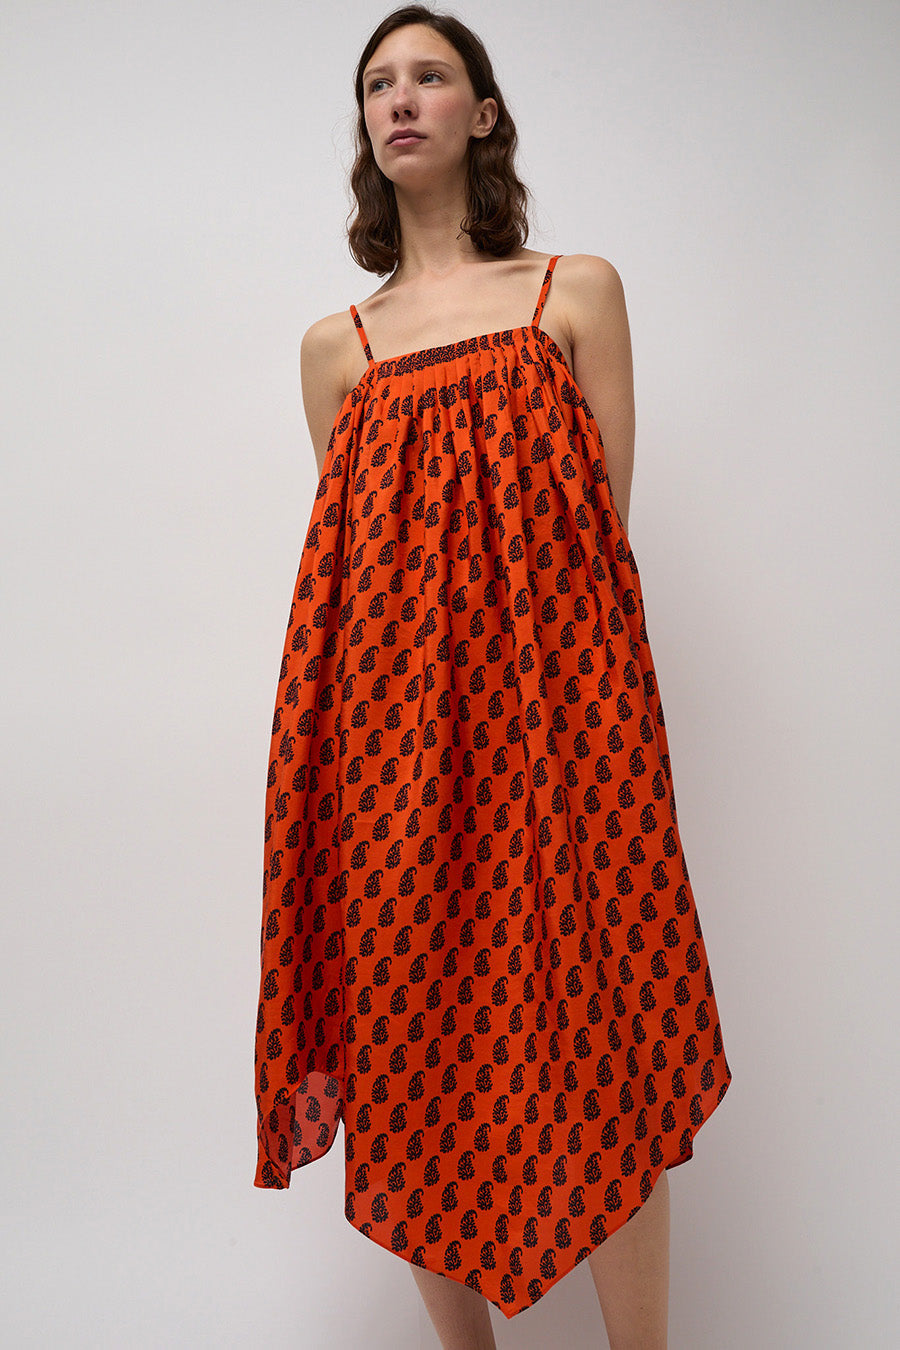 Anaak Etretat Print Handkerchief Dress in Vermillion Paisley